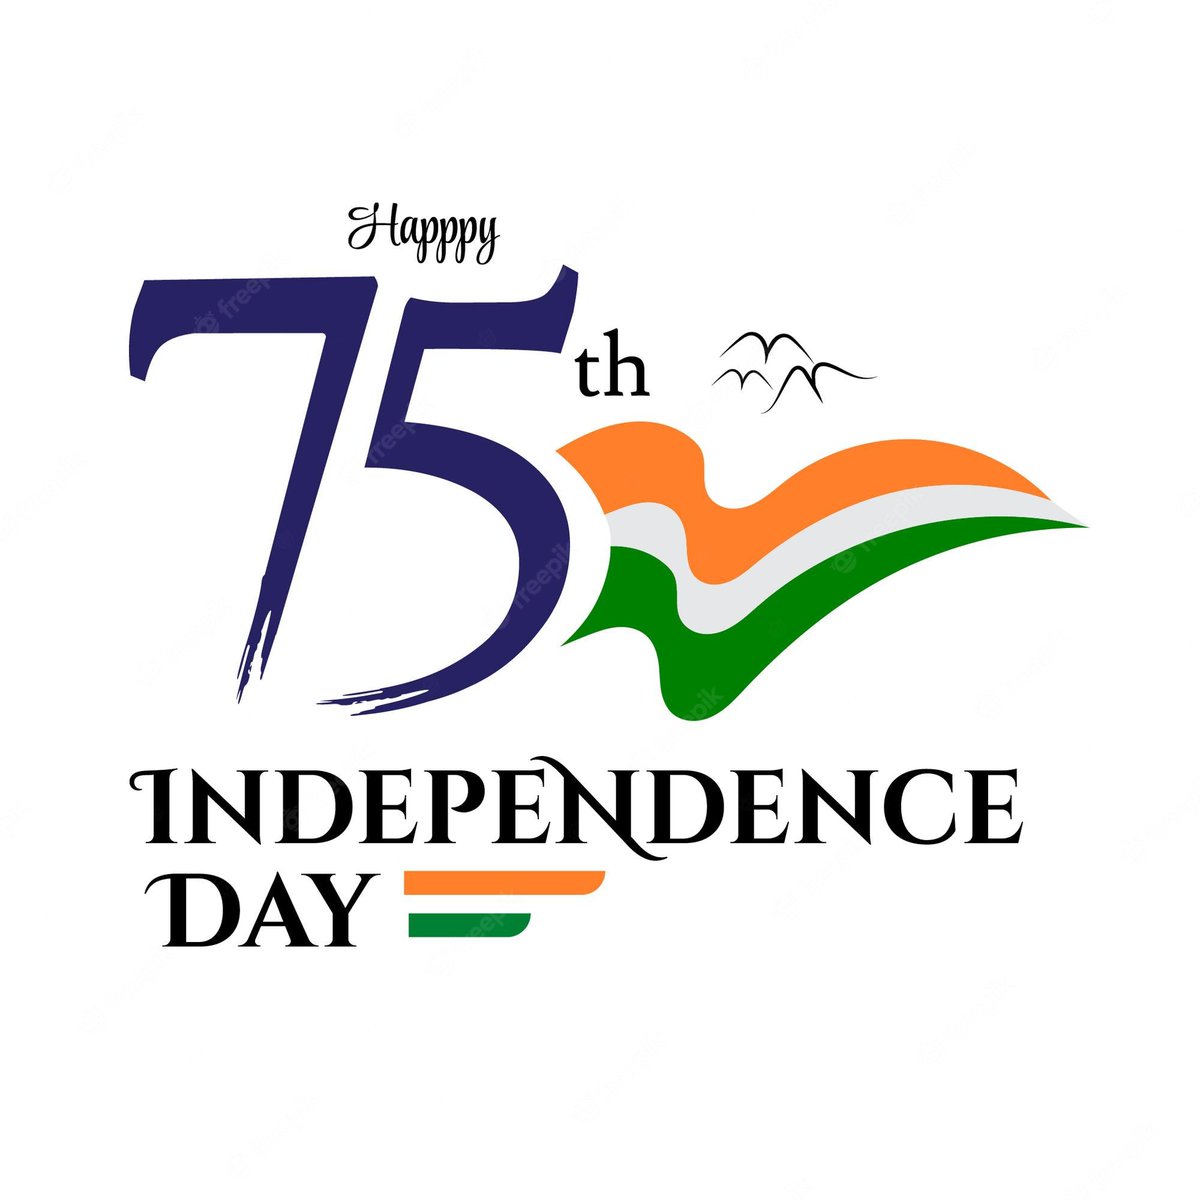 HAPPY INDEPENDENCE DAY INDIA ❤️

#IndiaAt75
#IndependenceDay